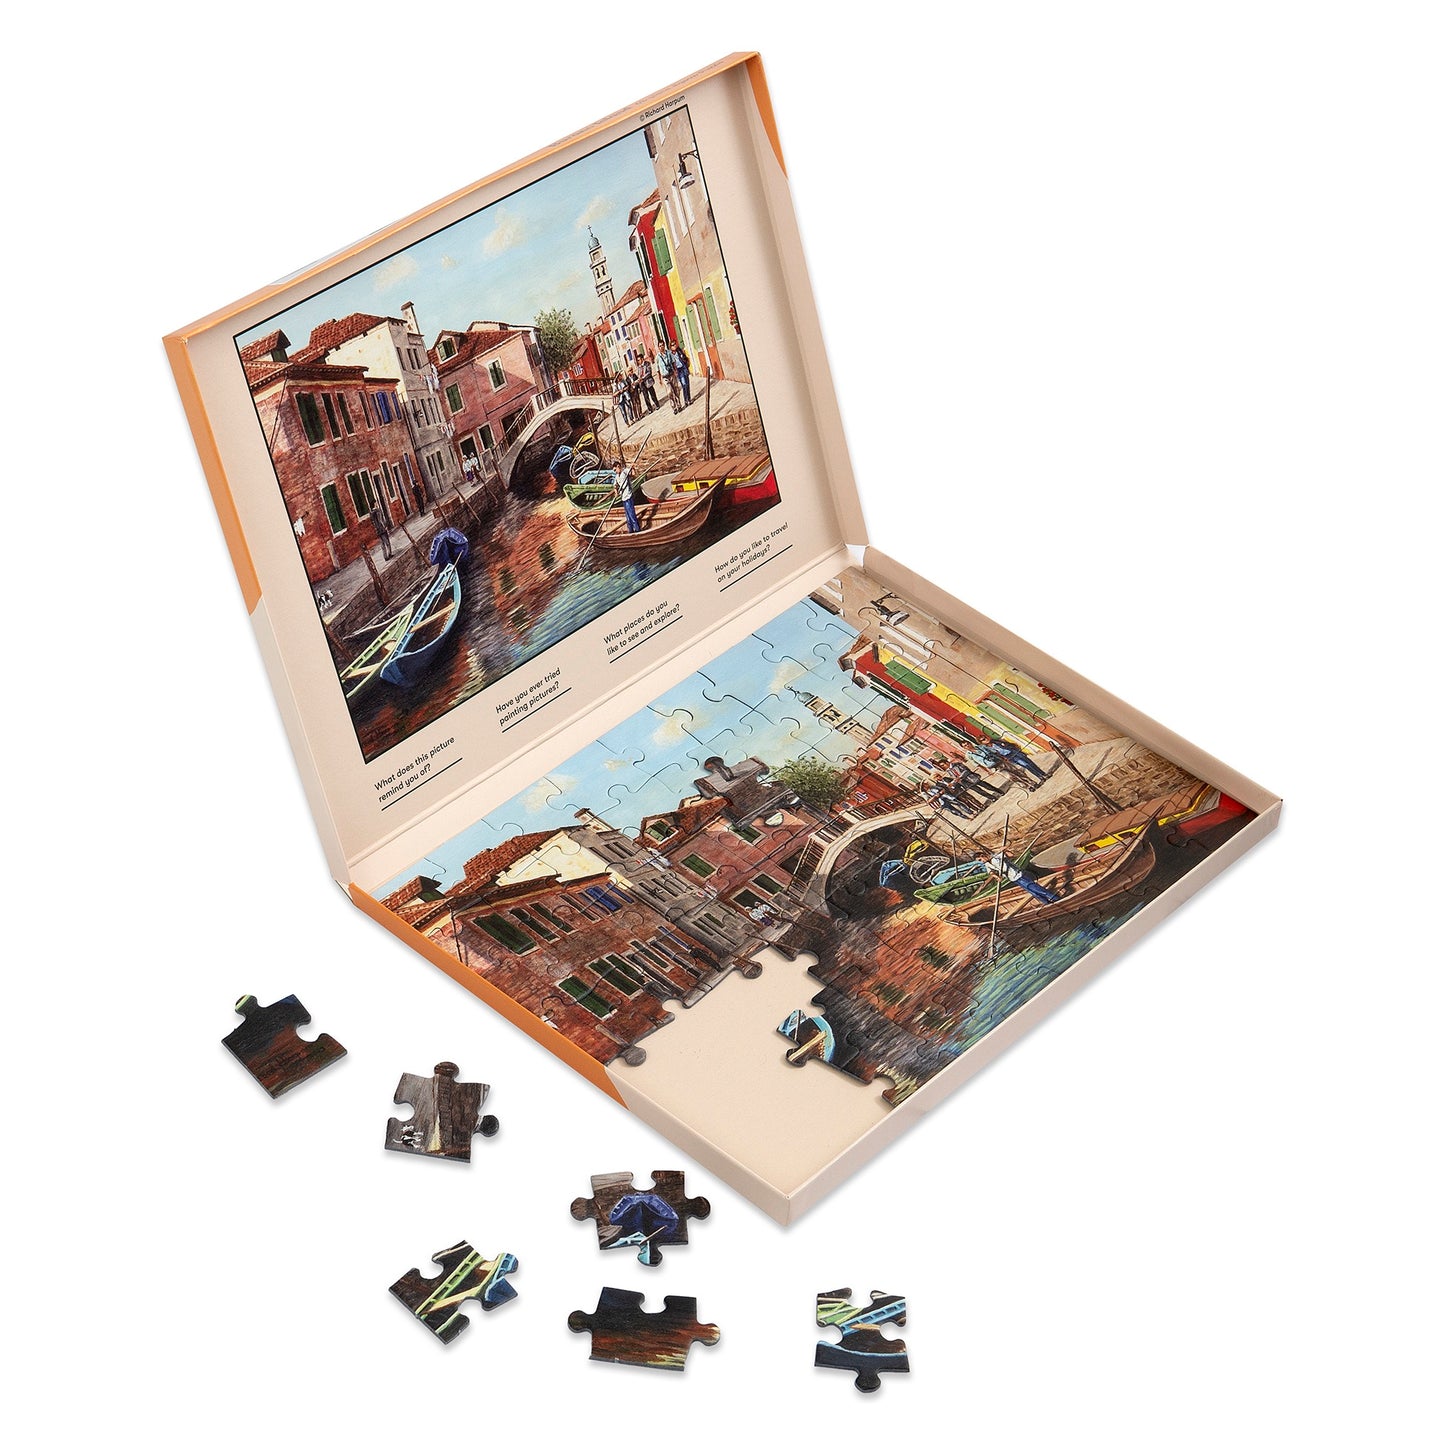 63-teiliges Puzzle „Insel Burano“